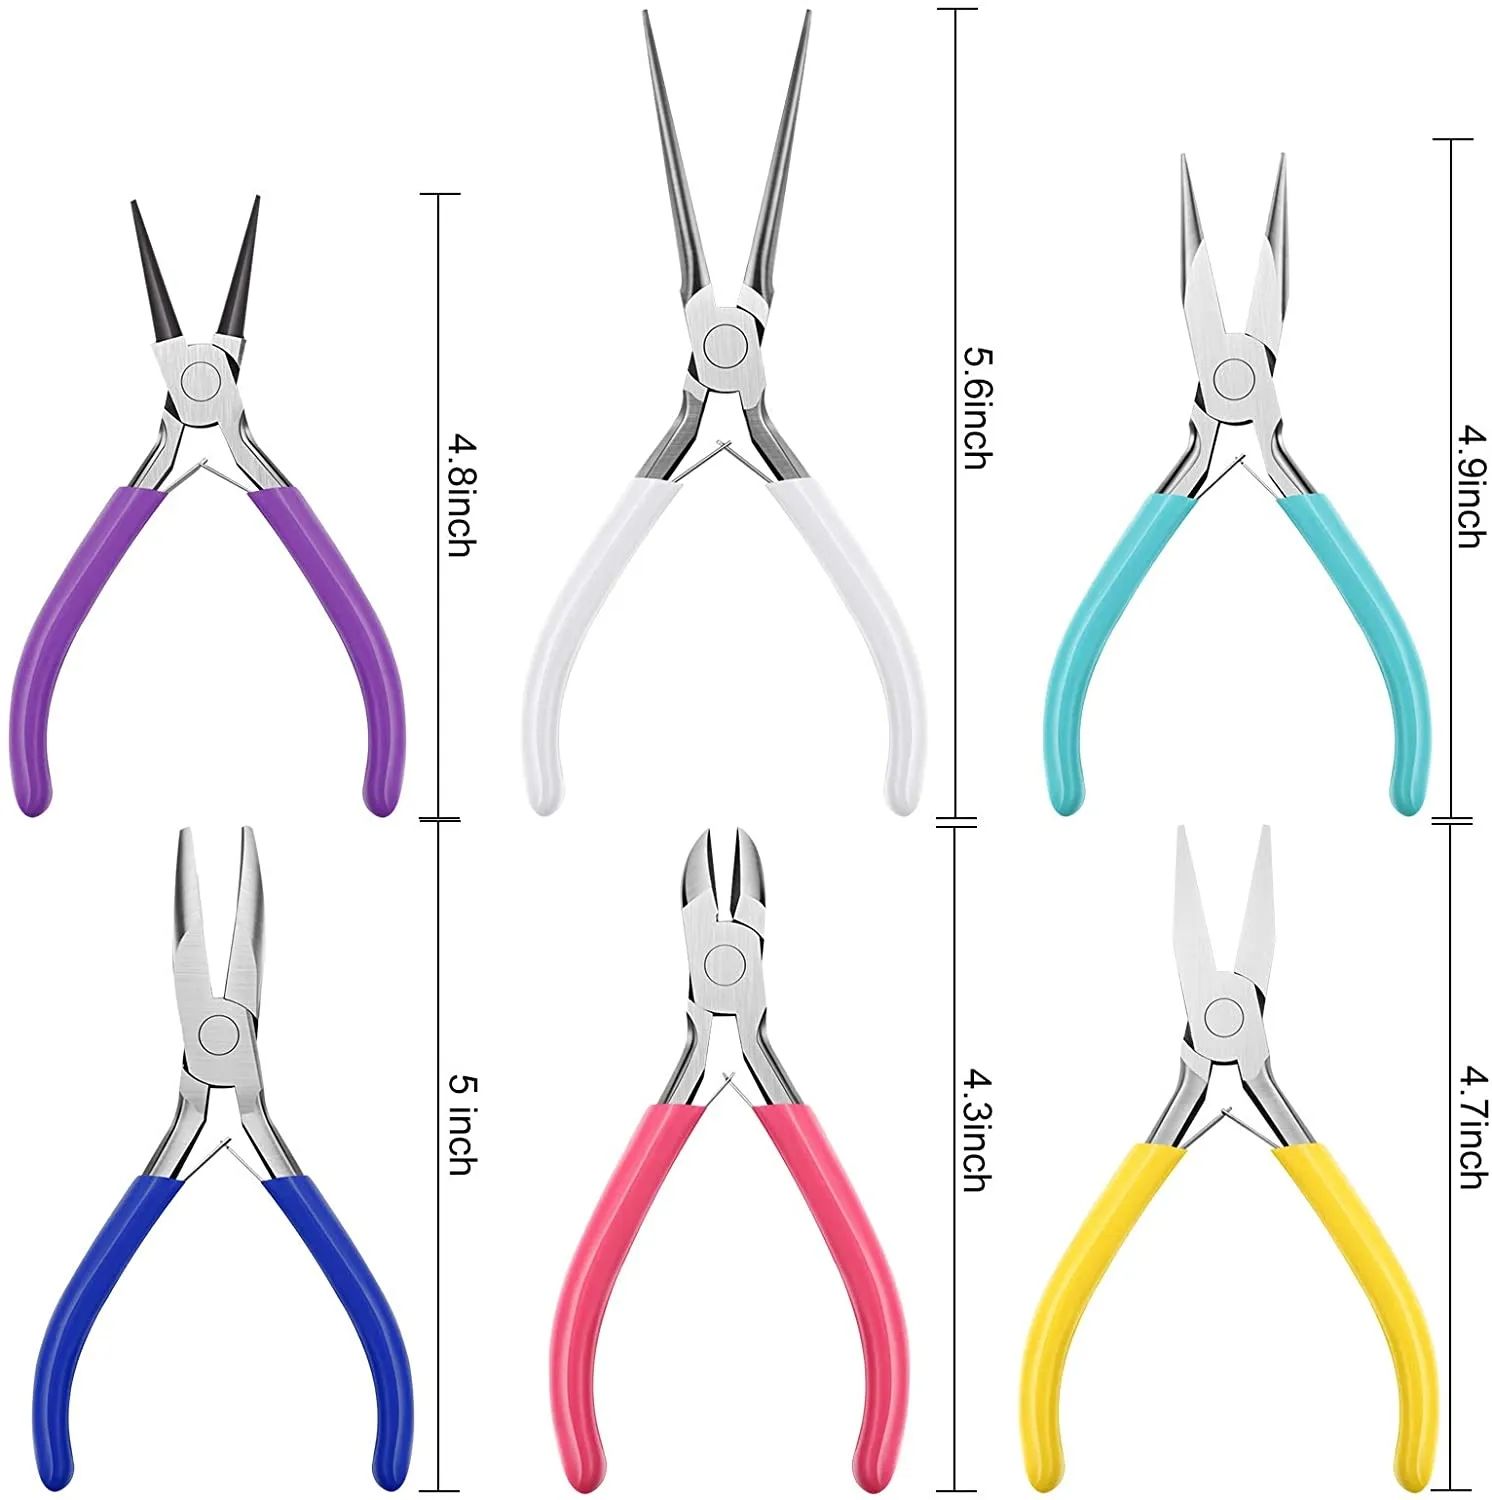 Buy Wholesale China Jewelry Pliers Pink Handle Anti Slip Splicing